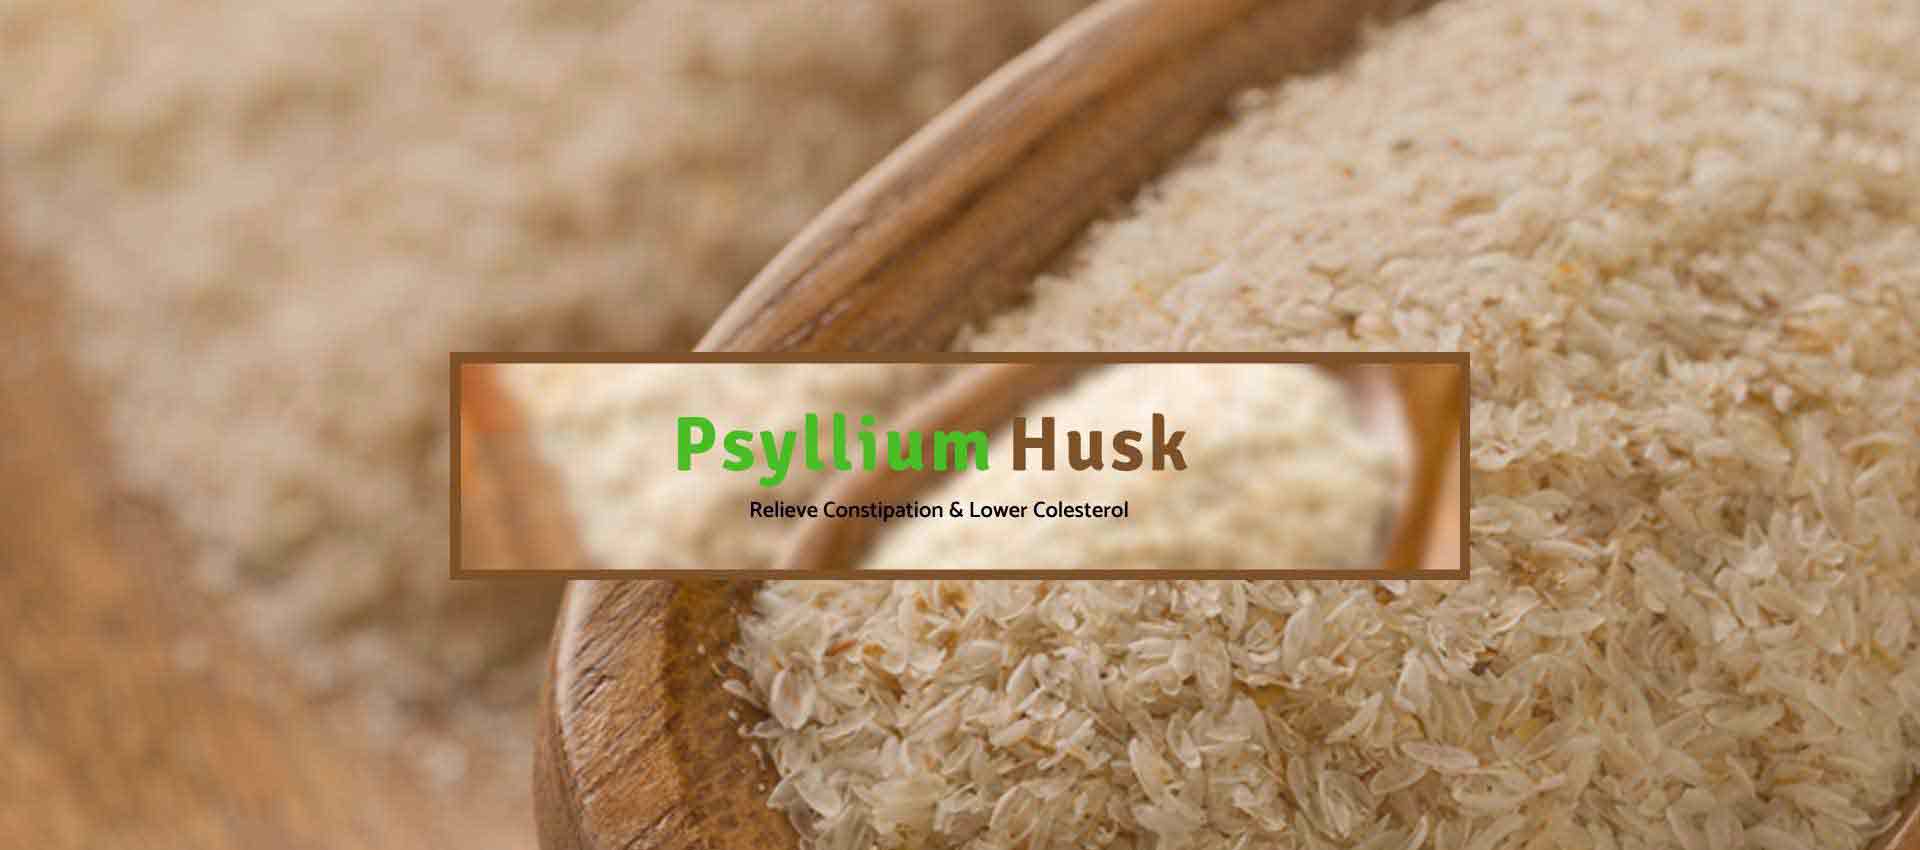 Psyllium Husk Manufacturers in Colombia